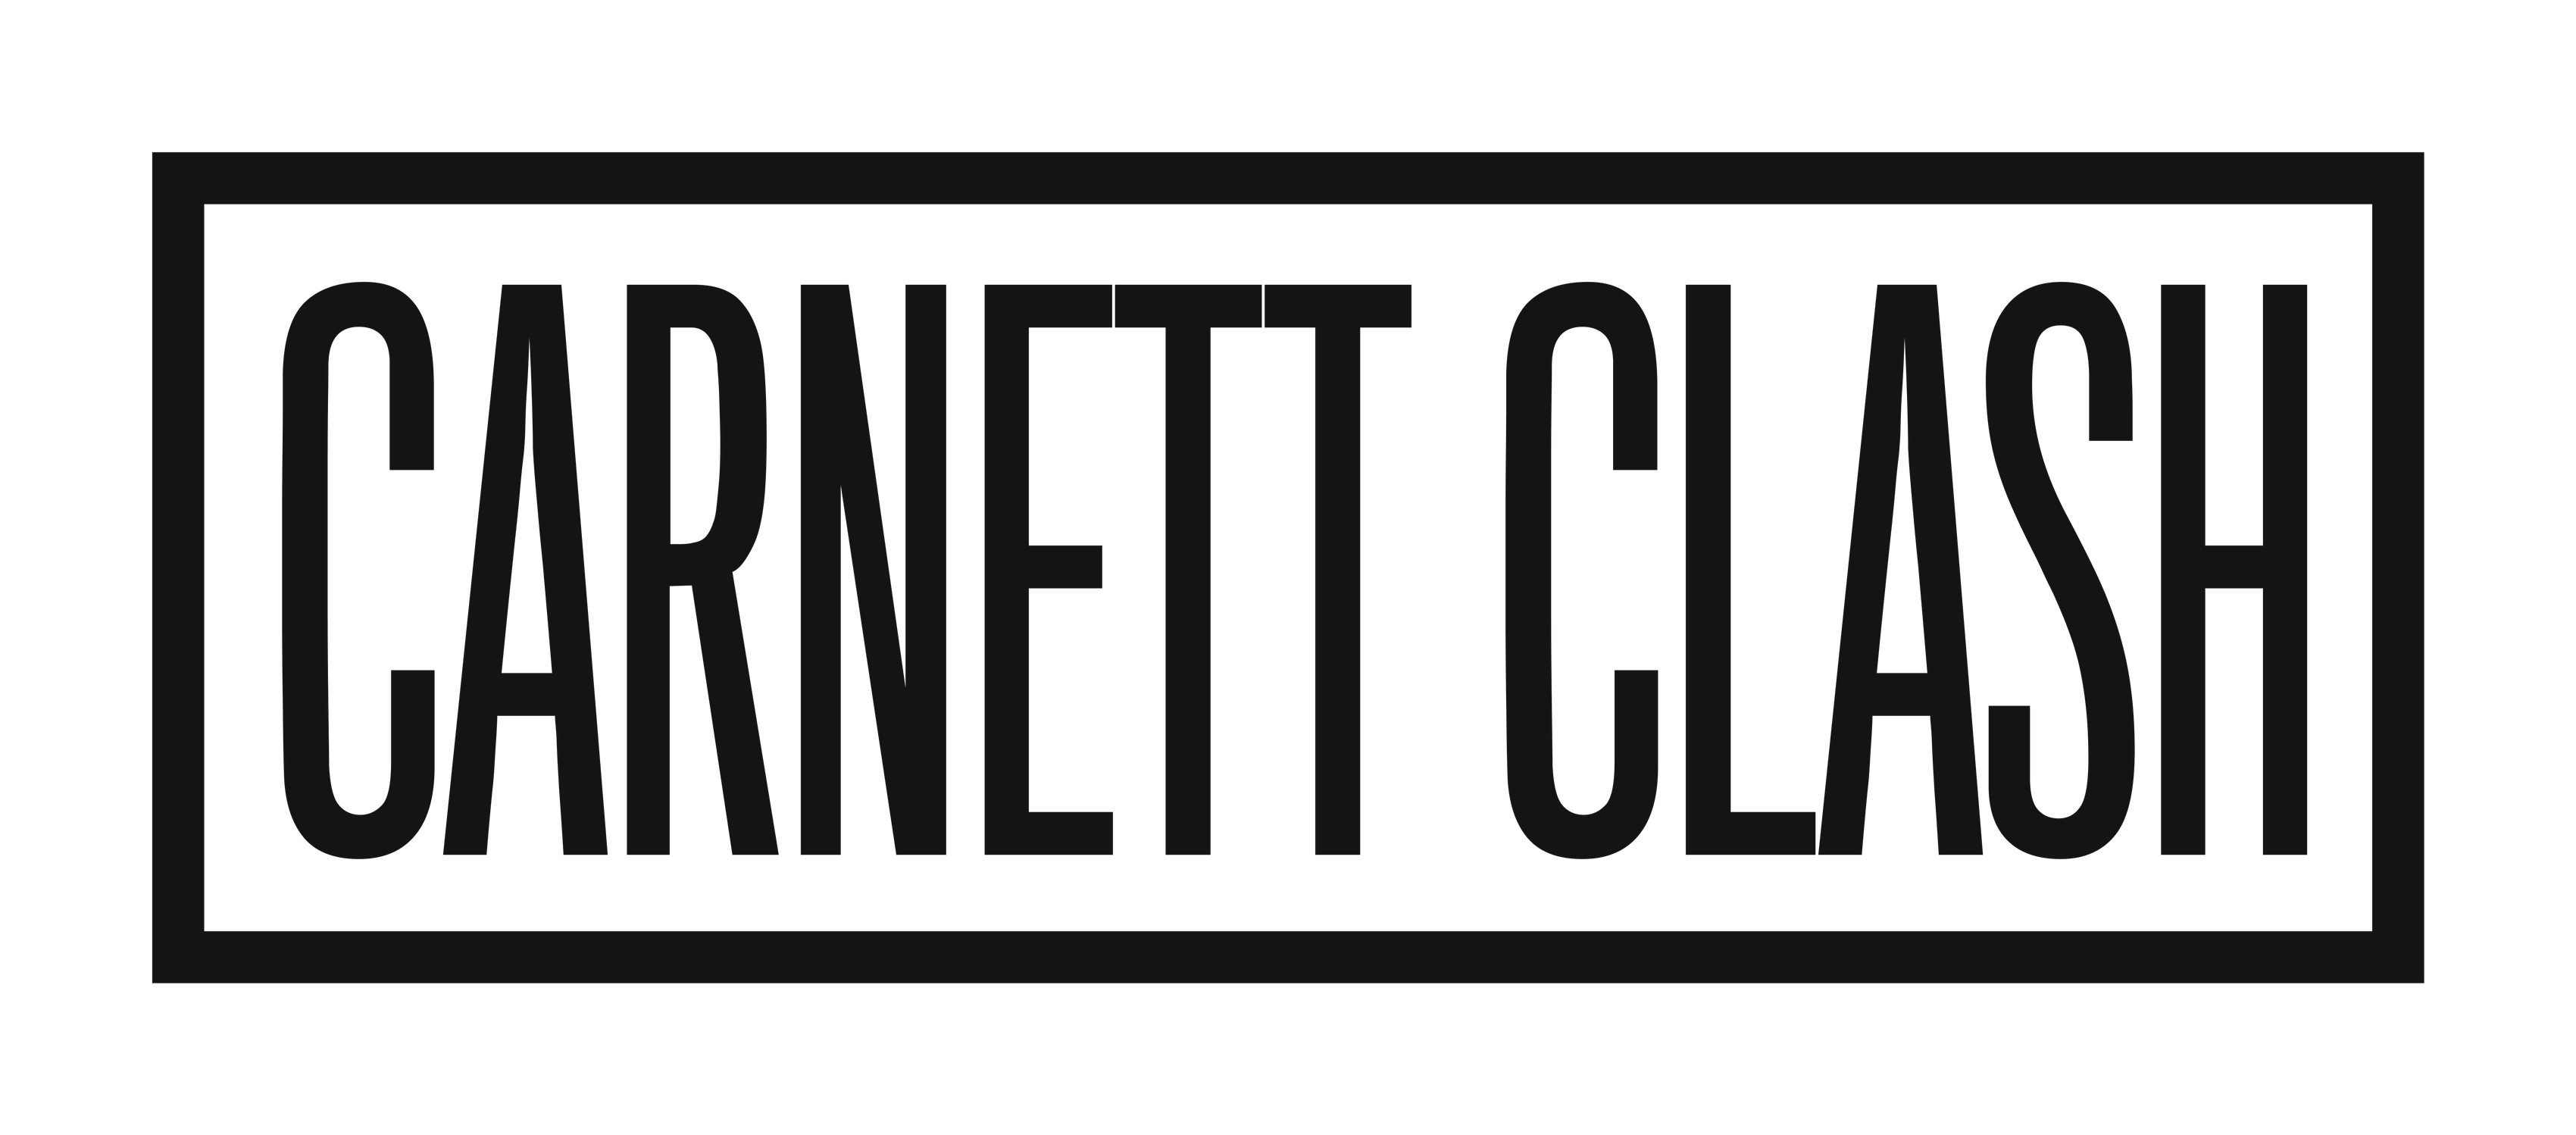 Carnett Clash